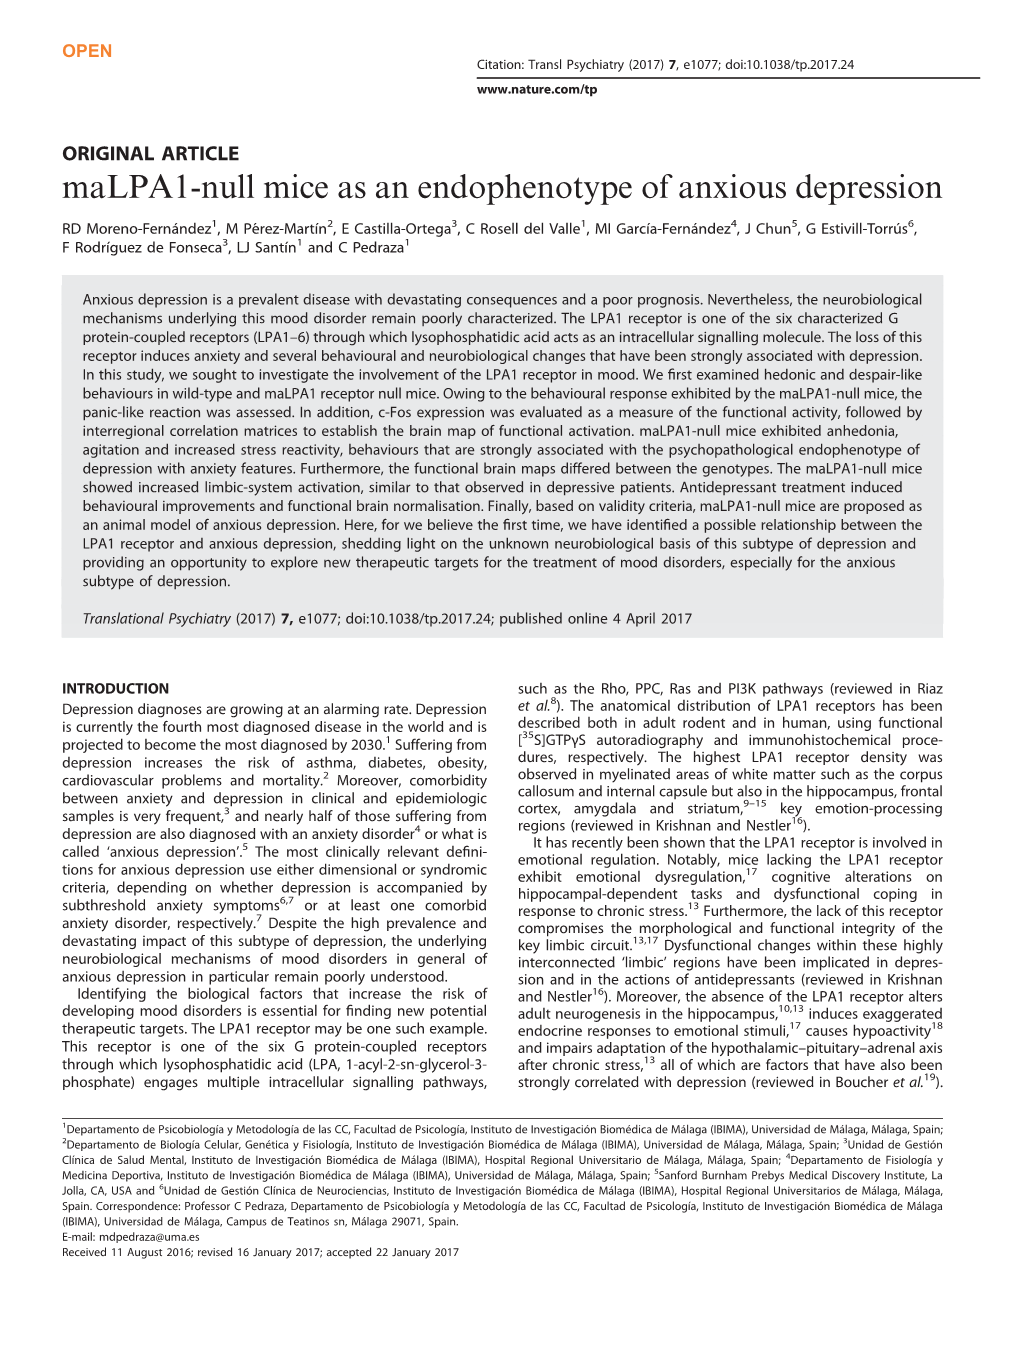 Malpa1-Null Mice As an Endophenotype of Anxious Depression